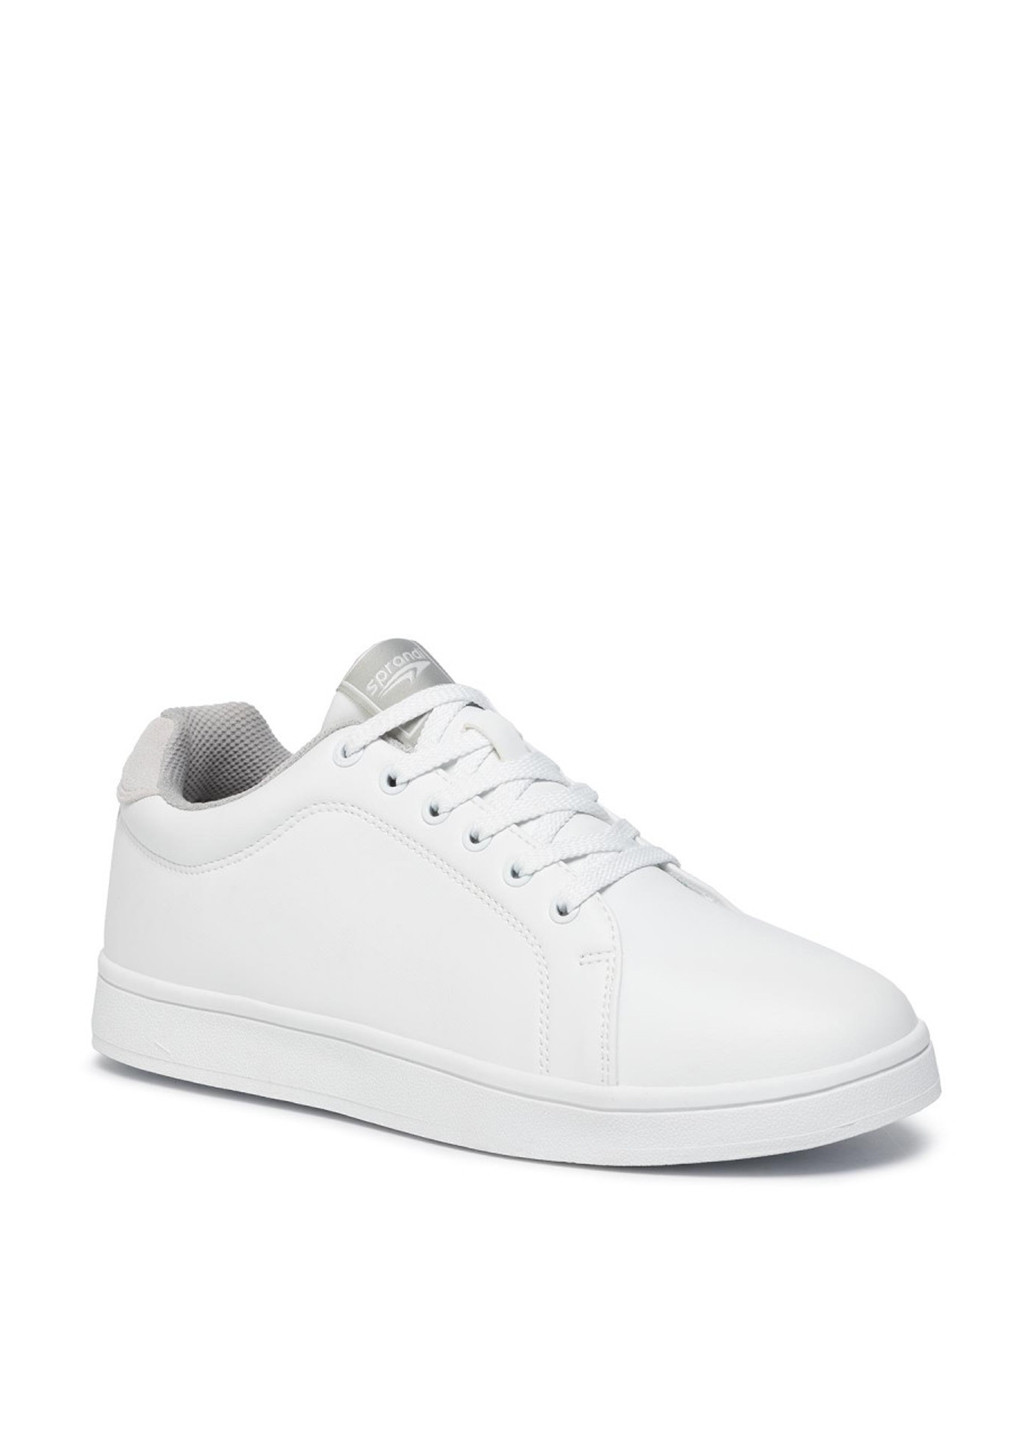 Белые демисезонные кросівки Sprandi MP07-181063-02